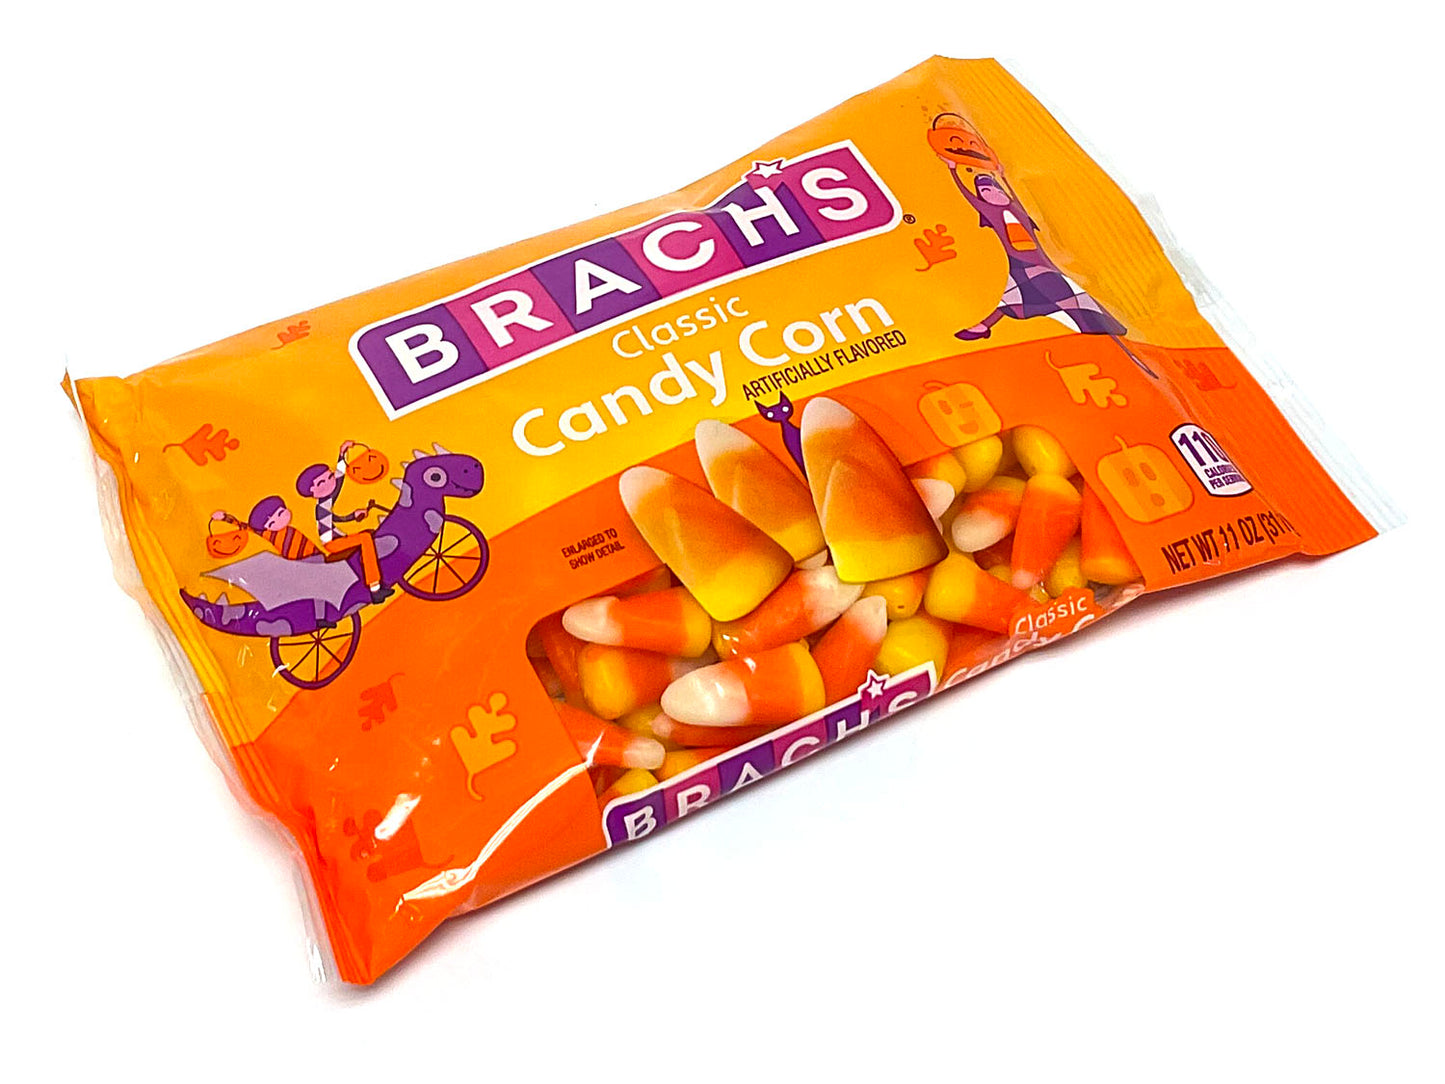 Brach's Candy Corn - 11oz bag